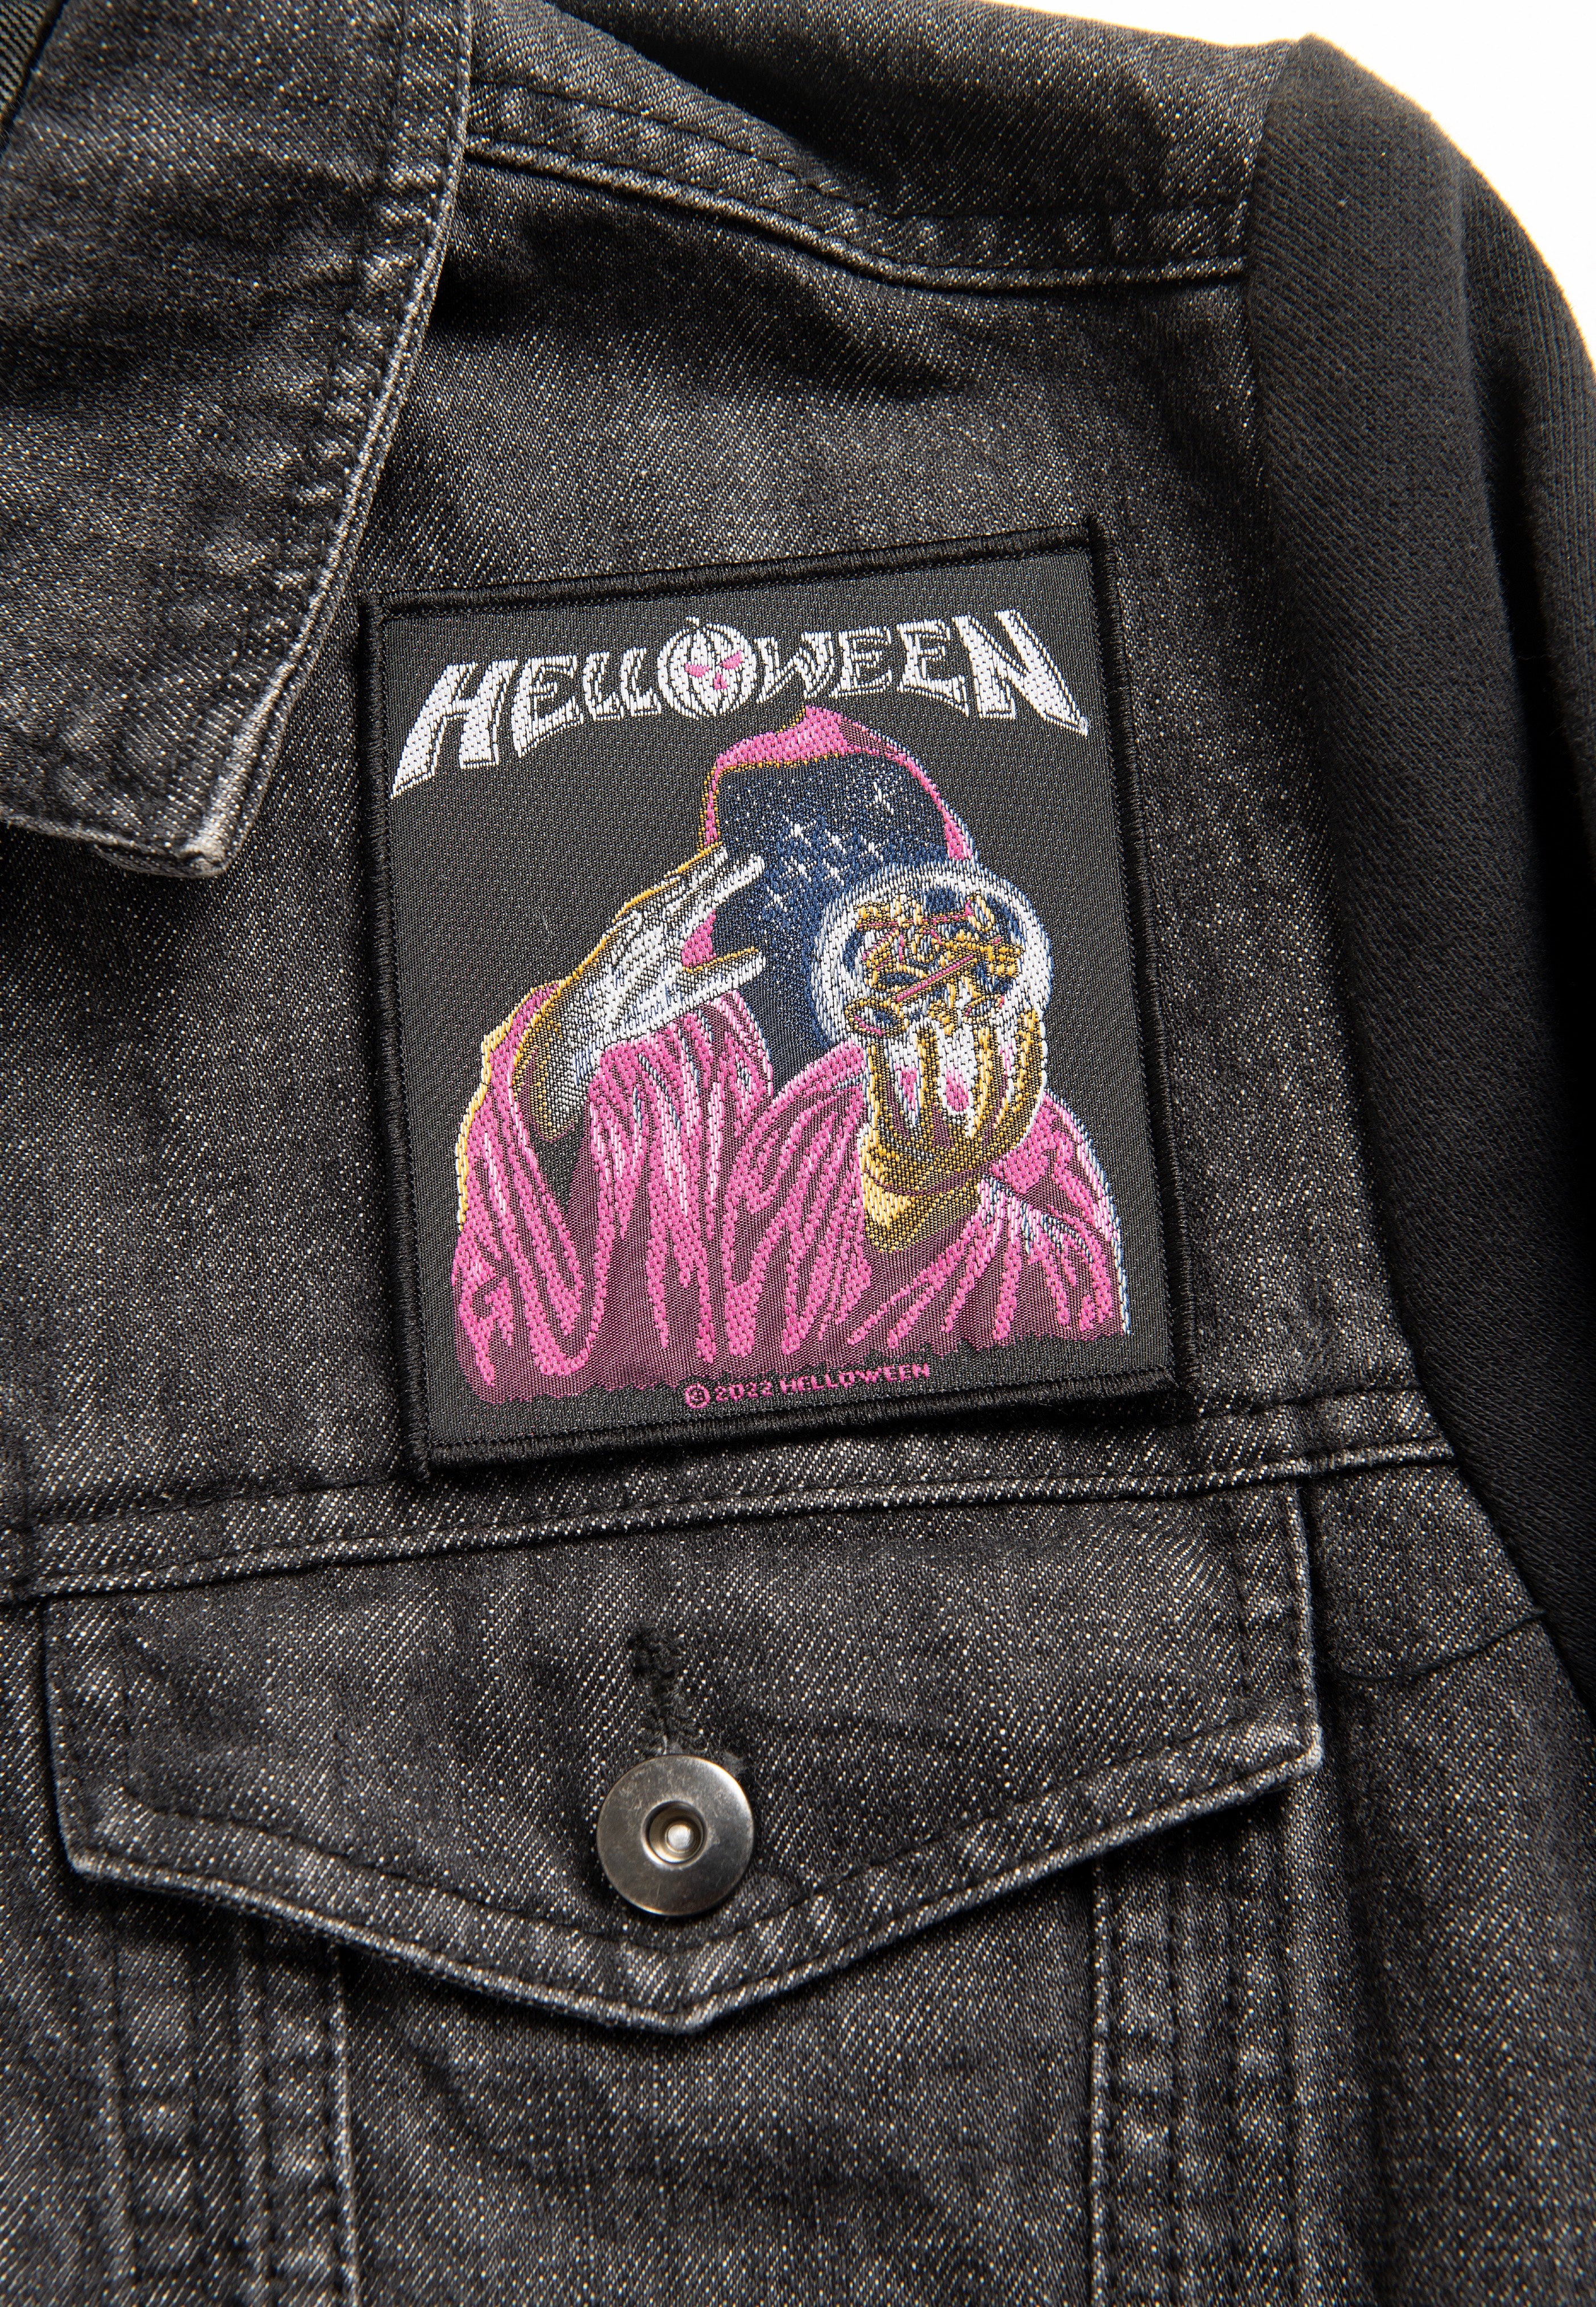 Helloween - Keeper Of The Seven Keys - Patch